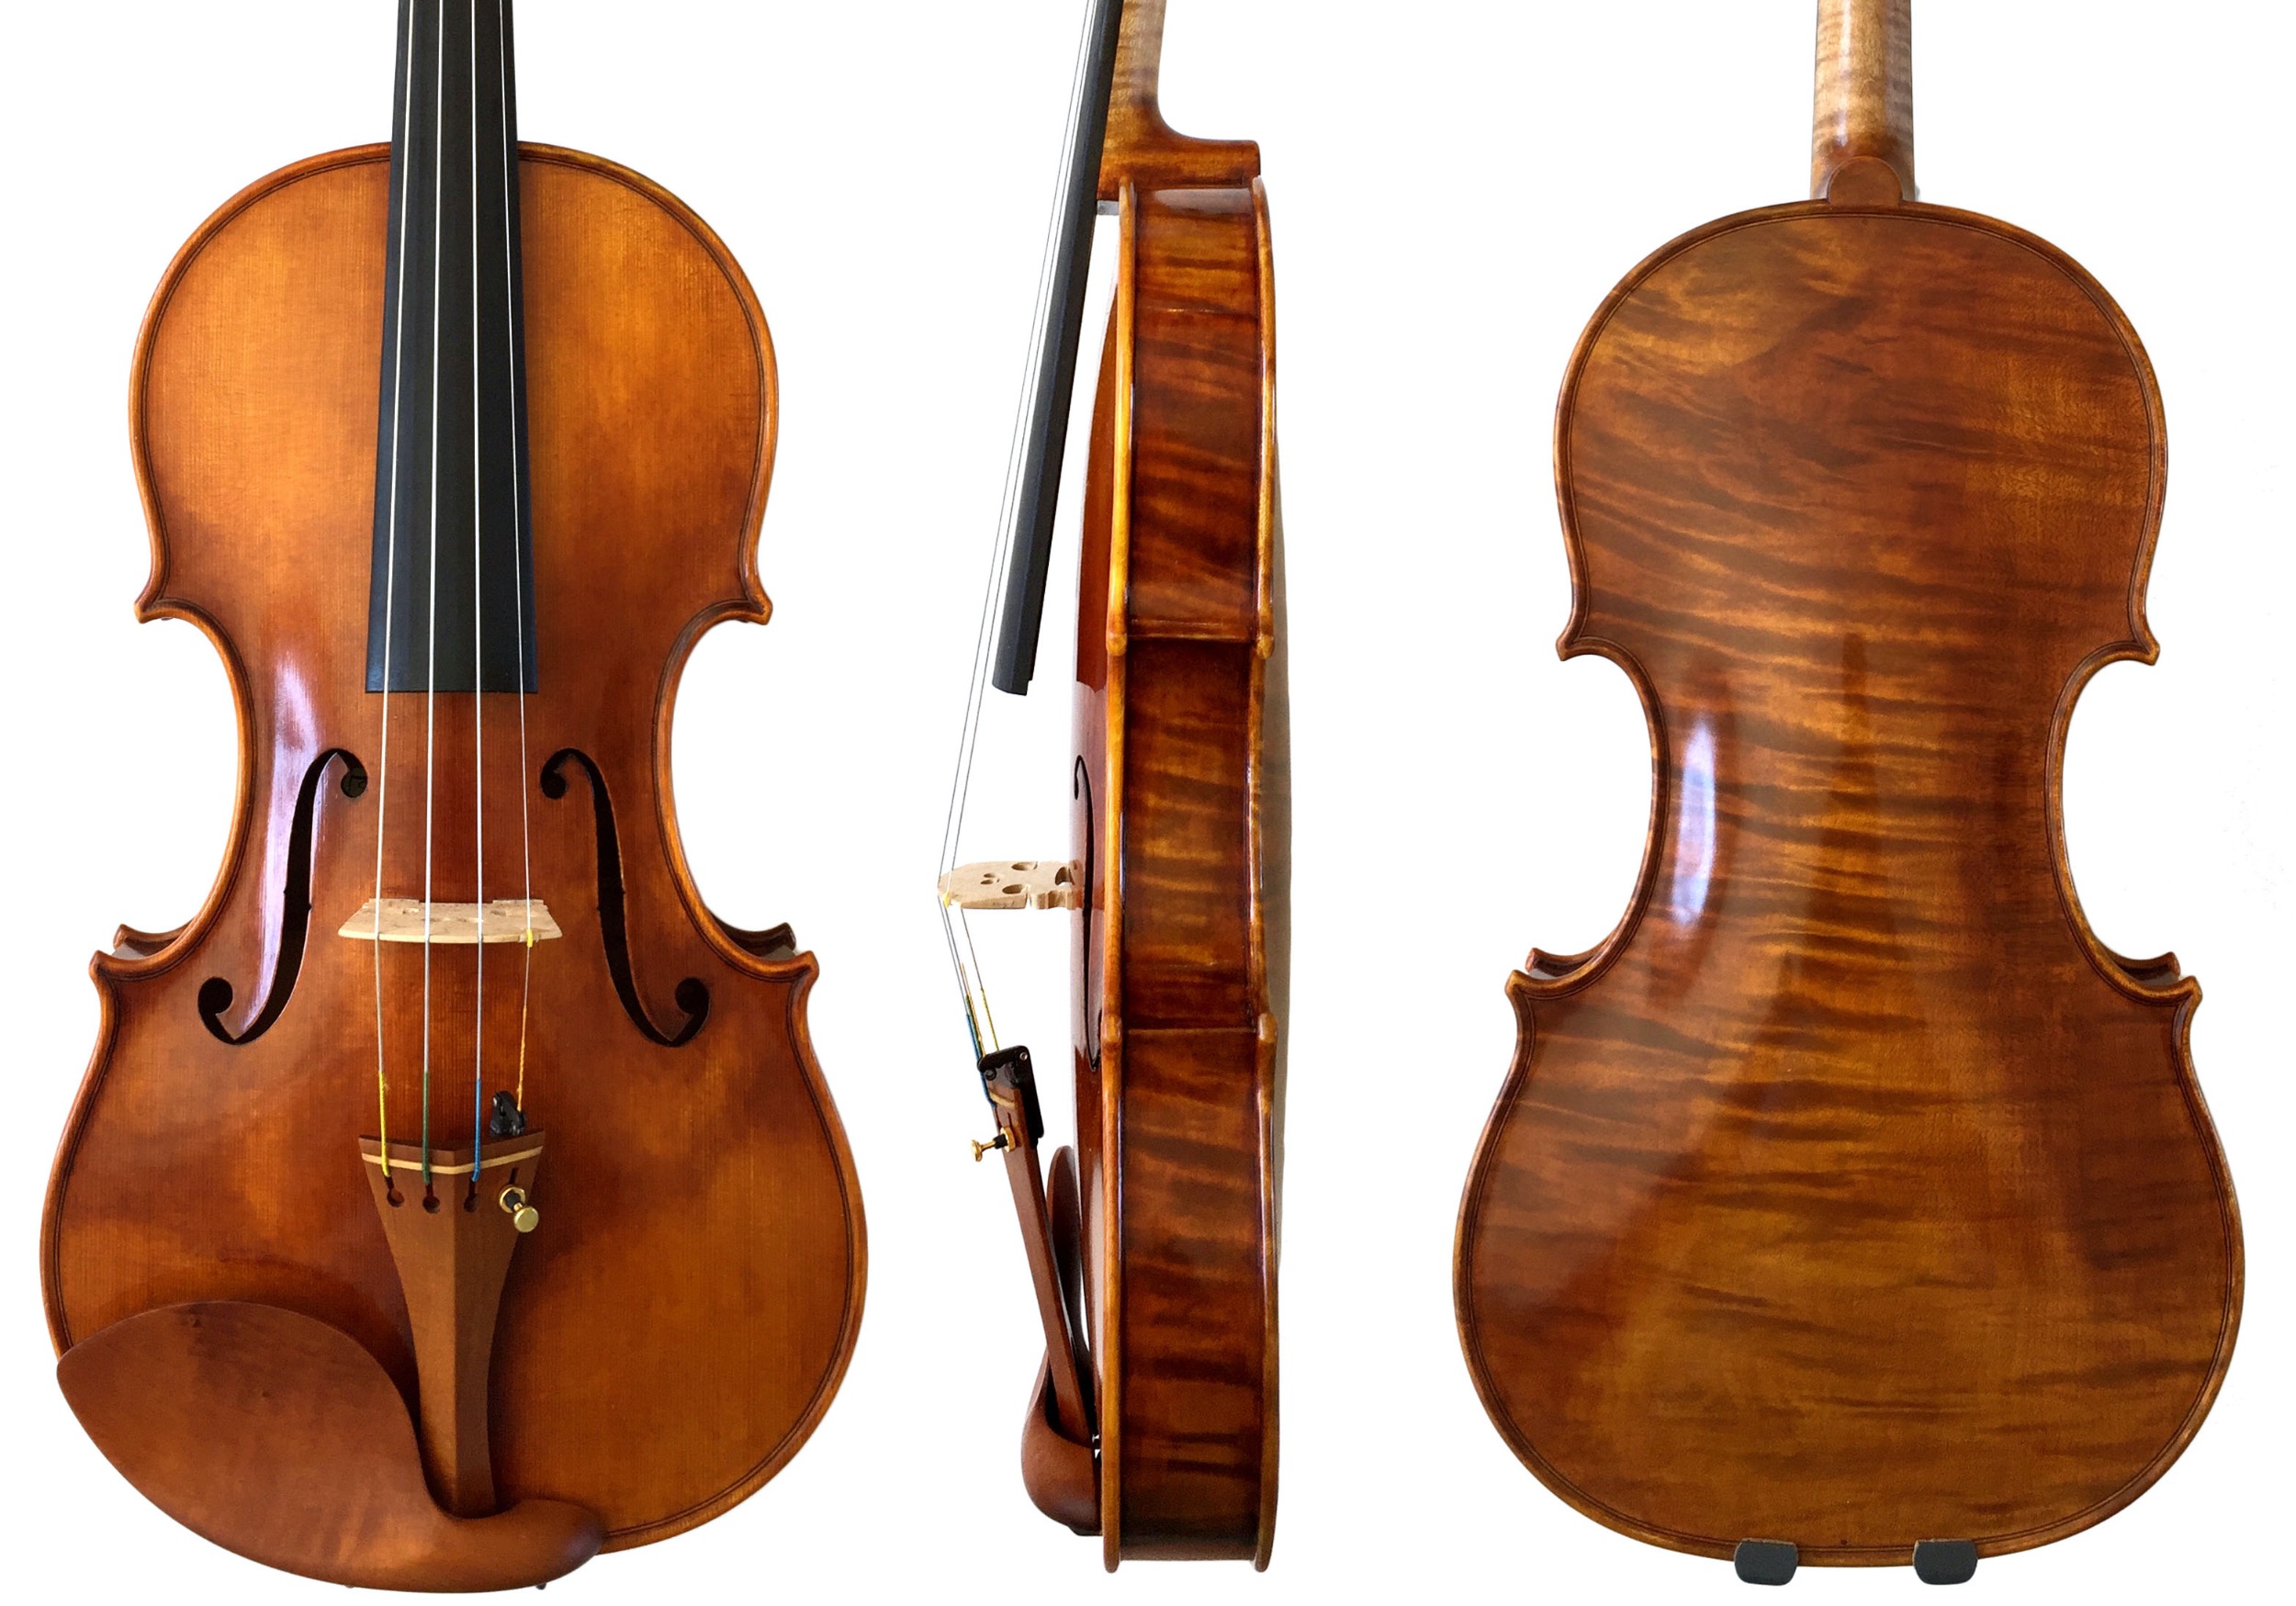 Dimitrov violin front, side and back